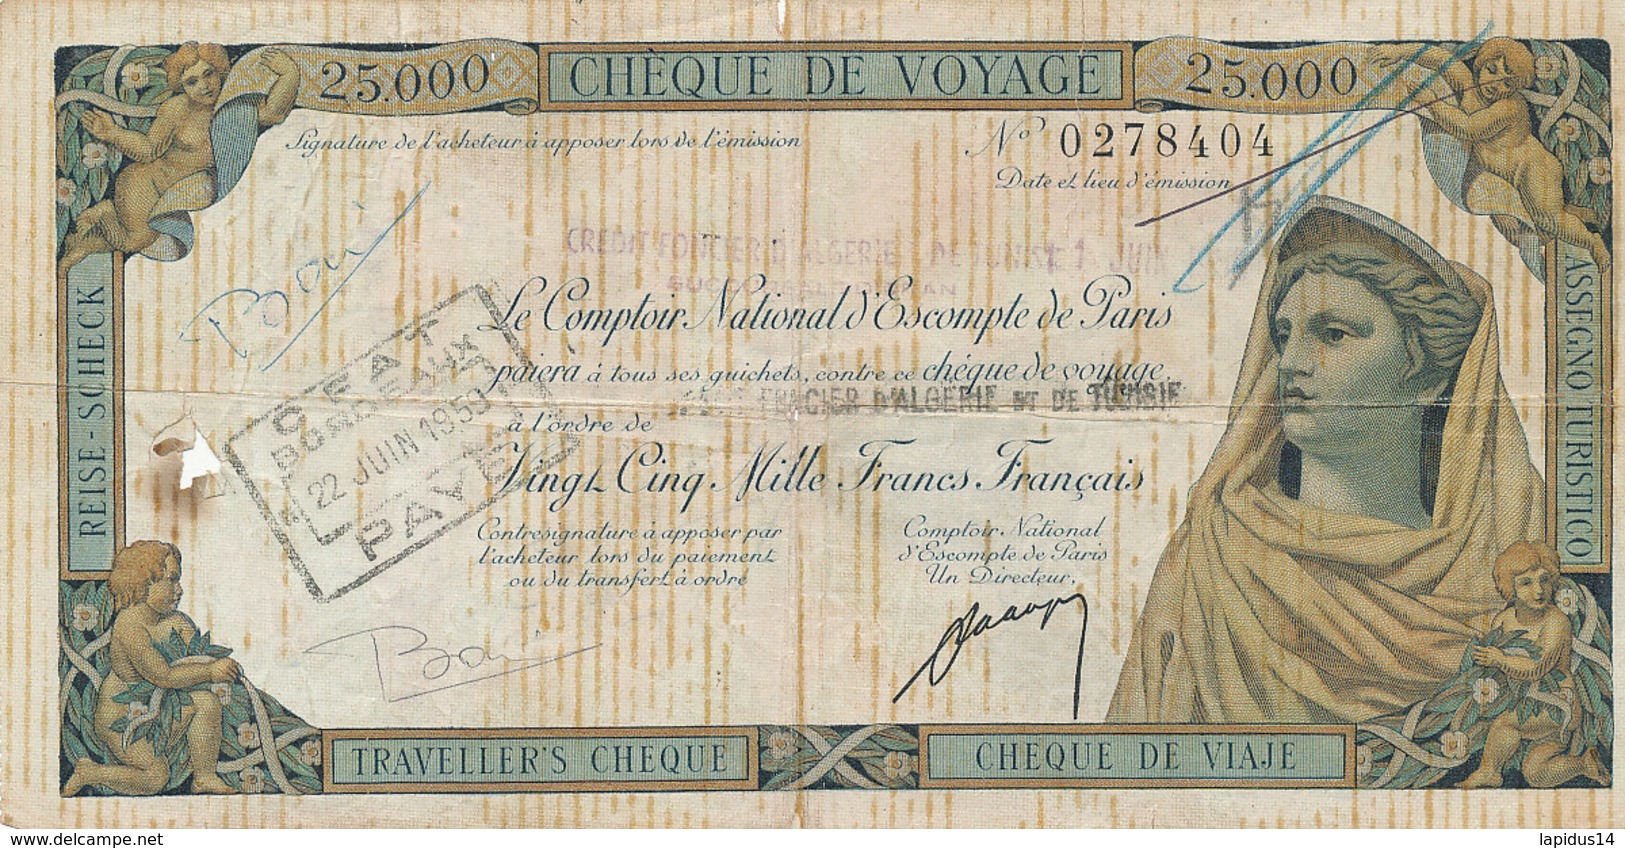 CHEQUE DE VOYAGE  25000 FRANCS FRANCAIS - Cheques & Traveler's Cheques